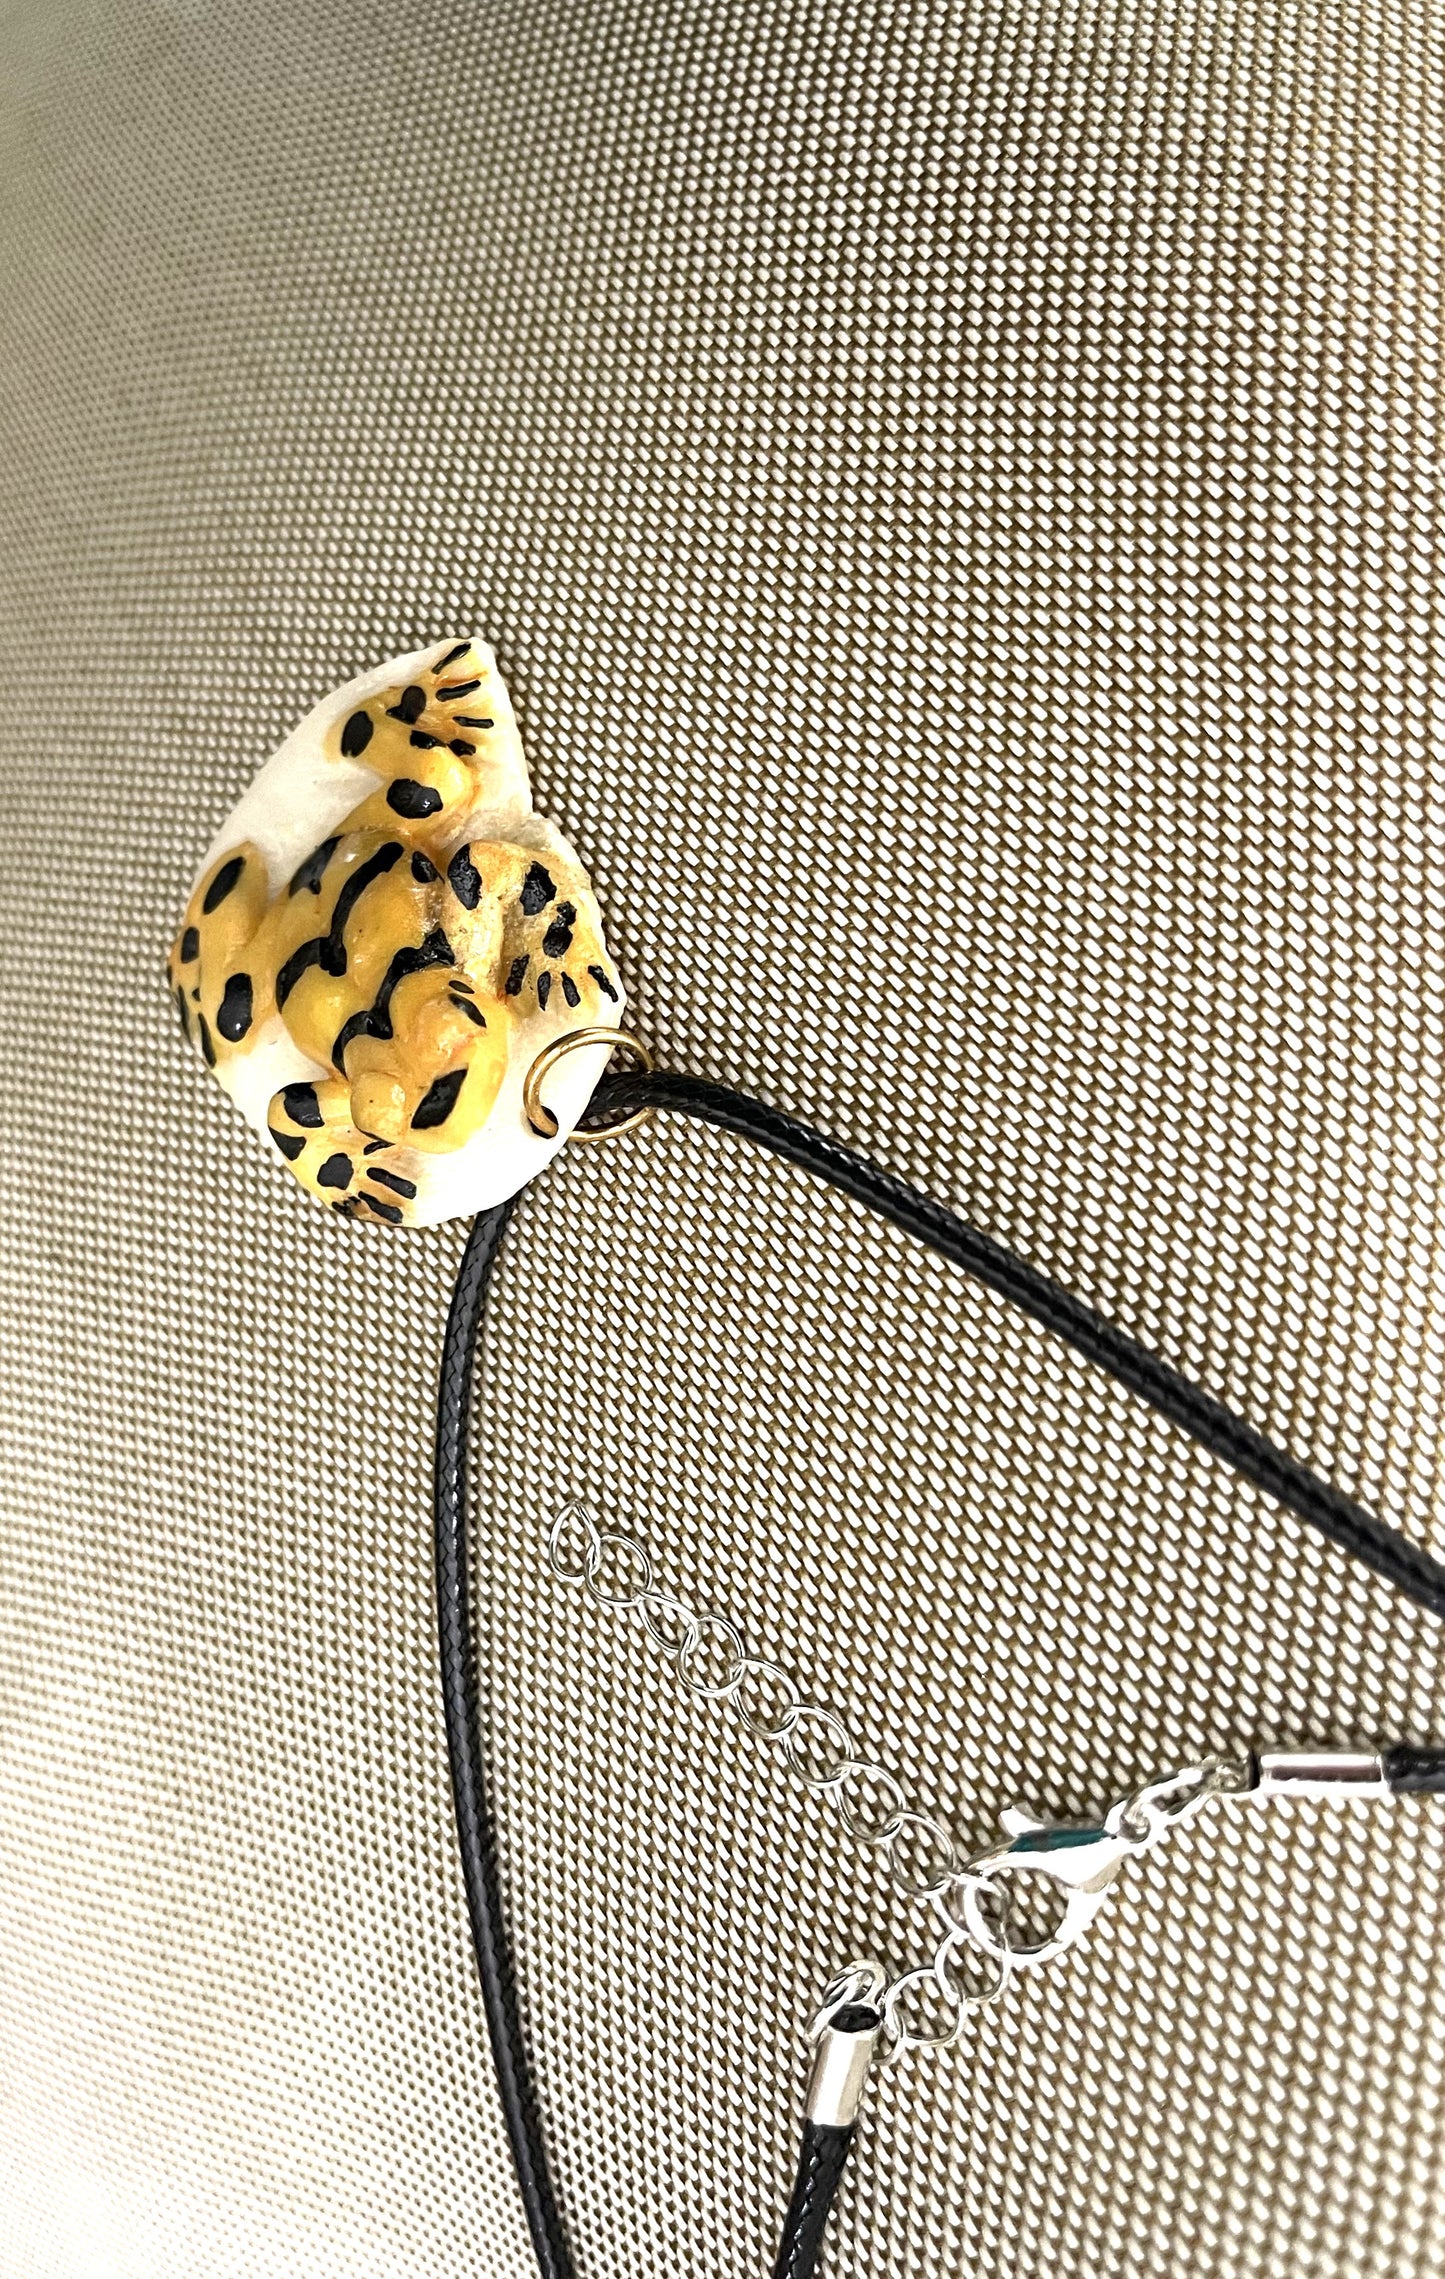 Golden Frog Tagua Necklace Jewelry Pendant Panama